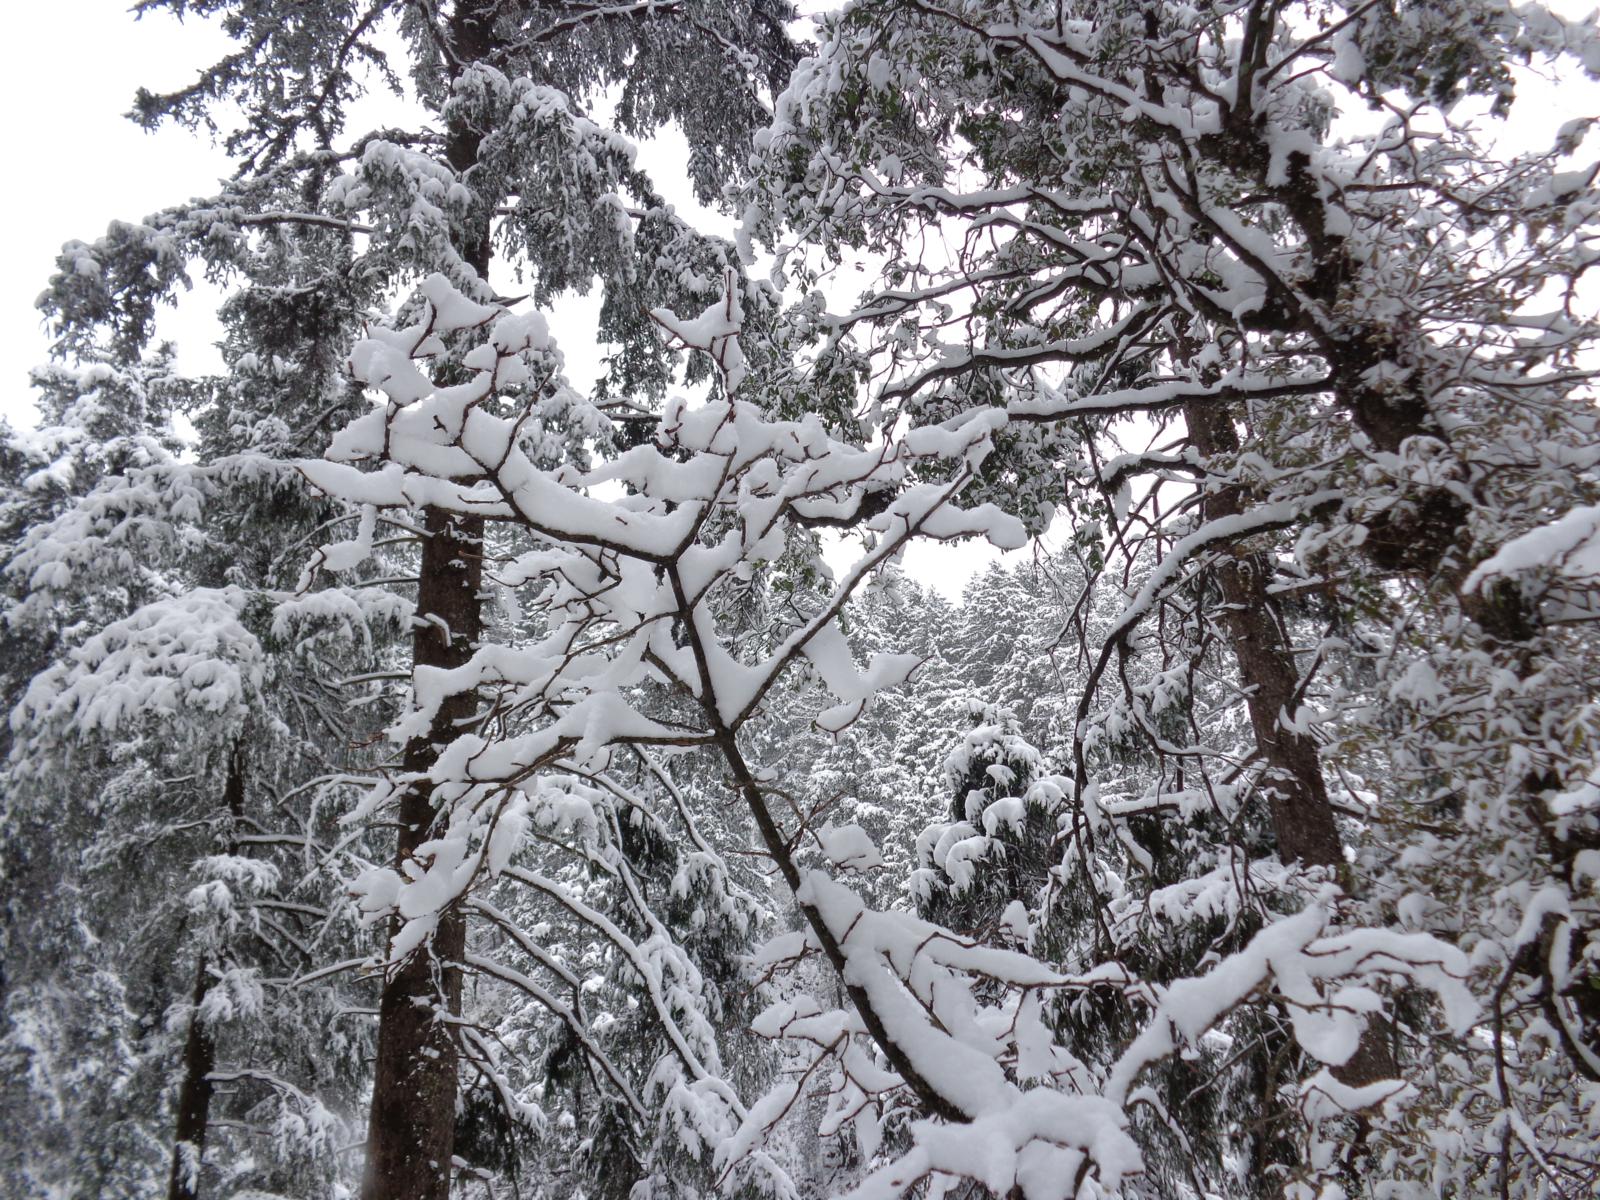 view of parashar Hill during snowfall dec 2013